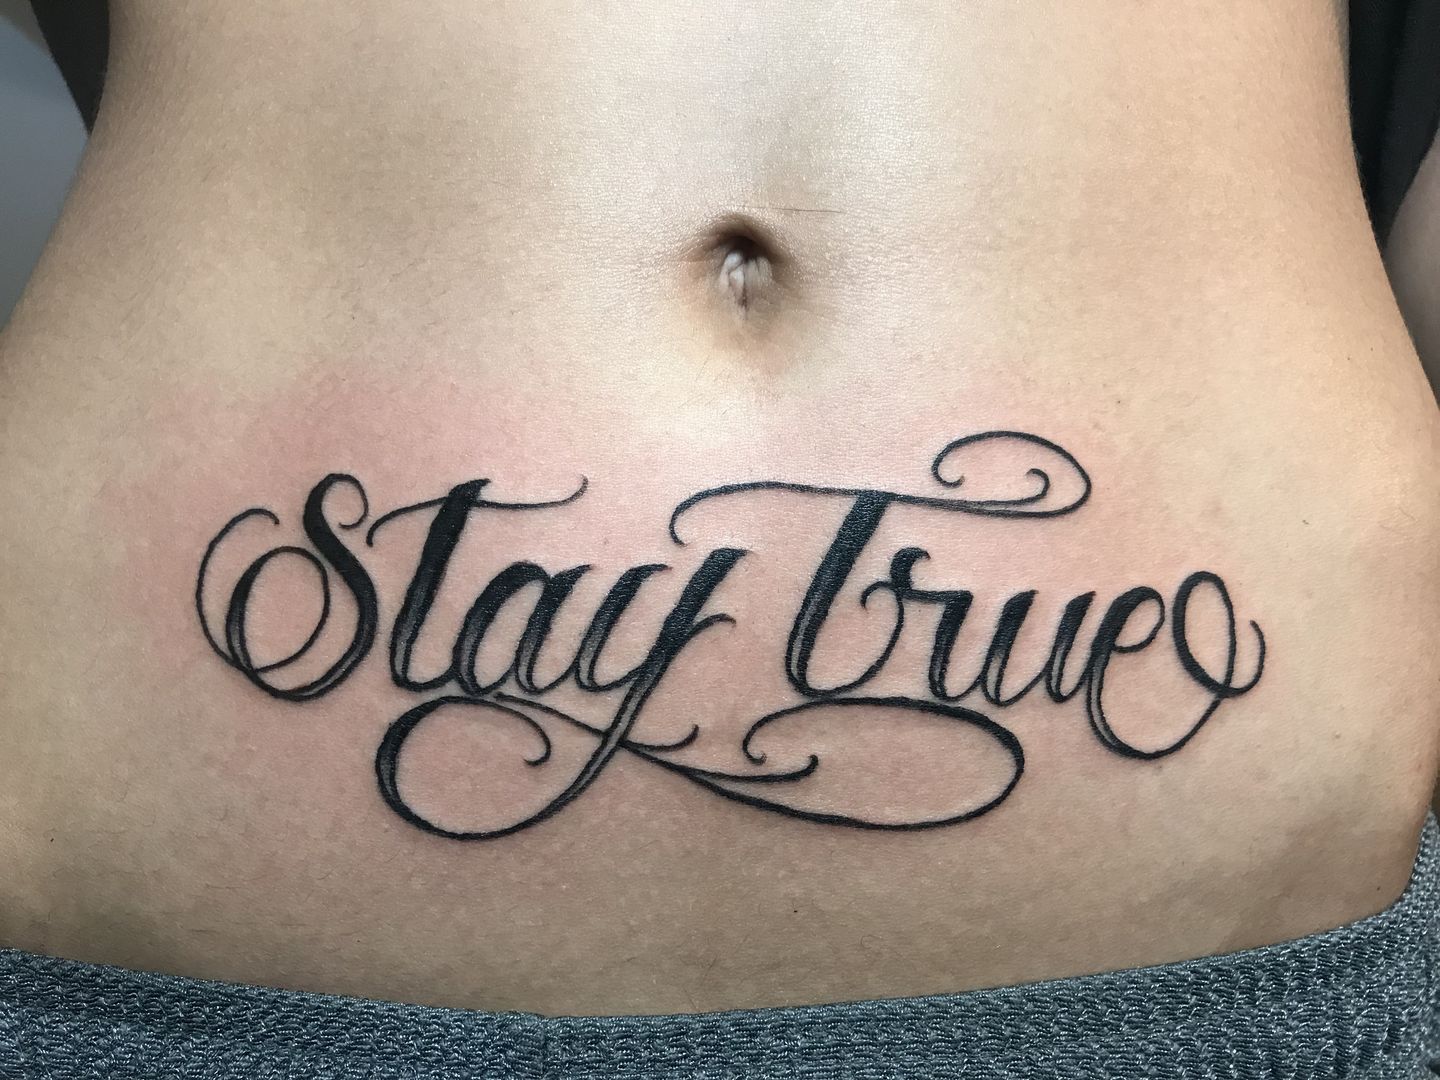 Stay True Tattoo 1030 S Limit Ave Sedalia MO Tattoos  Piercing   MapQuest